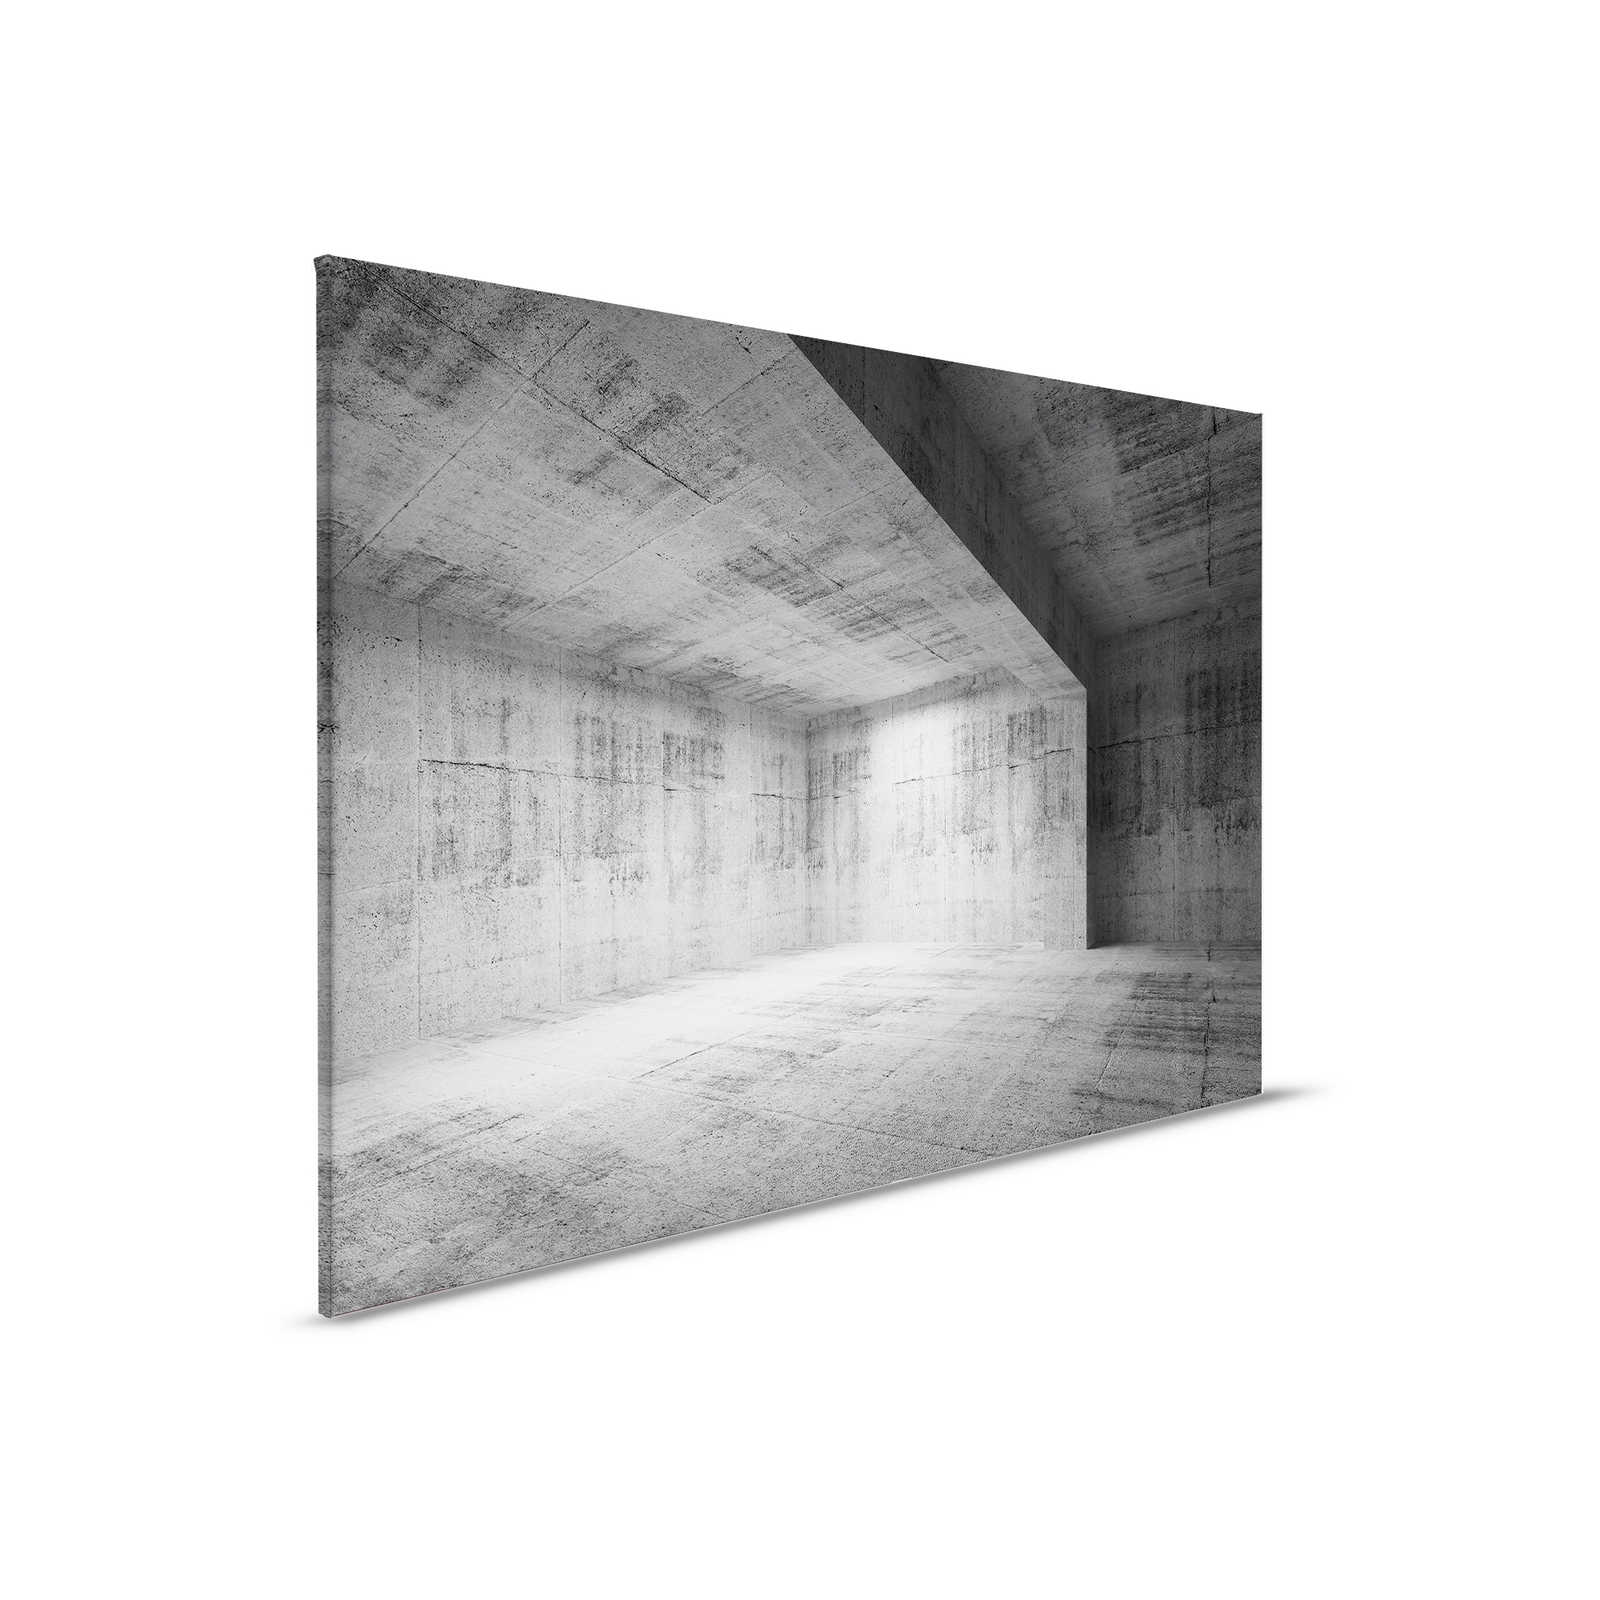         Canvas painting Concrete Room with 3D effect - 0.90 m x 0.60 m
    